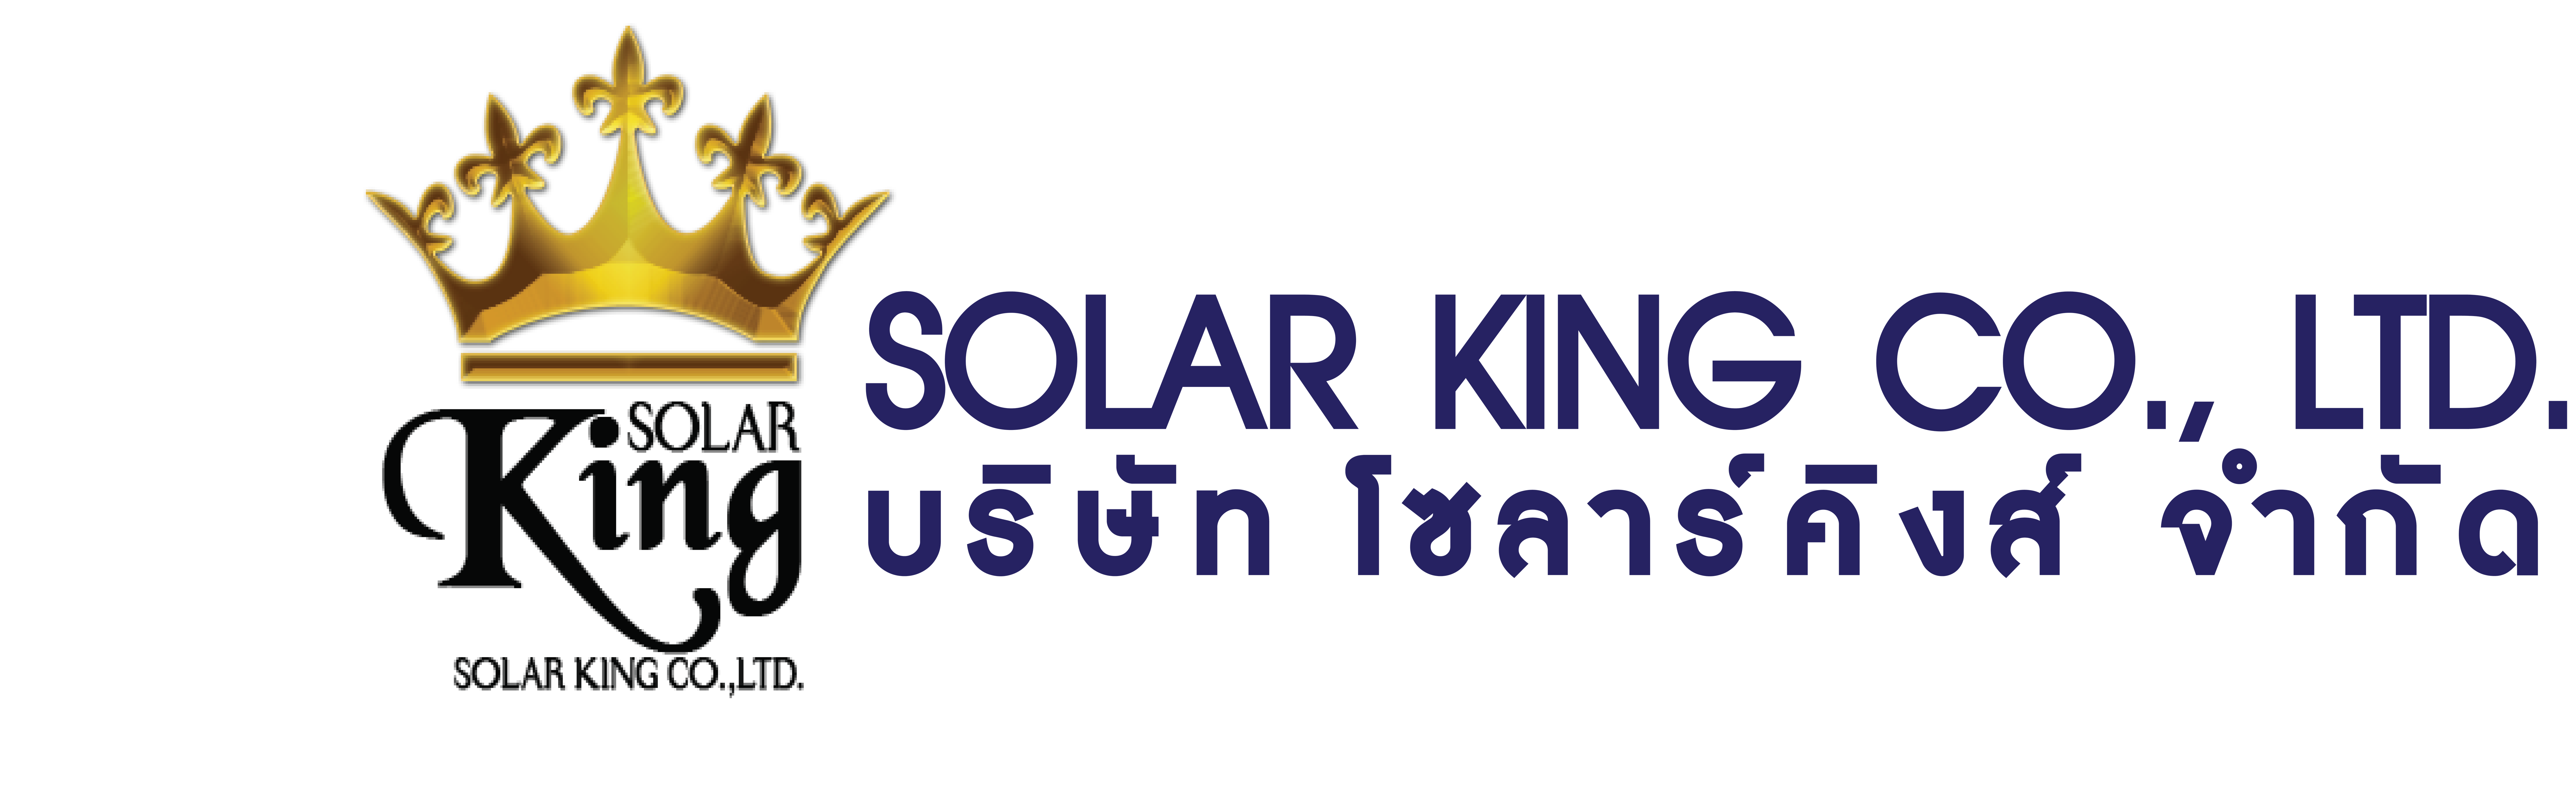 SOLAR KING CO., LTD.